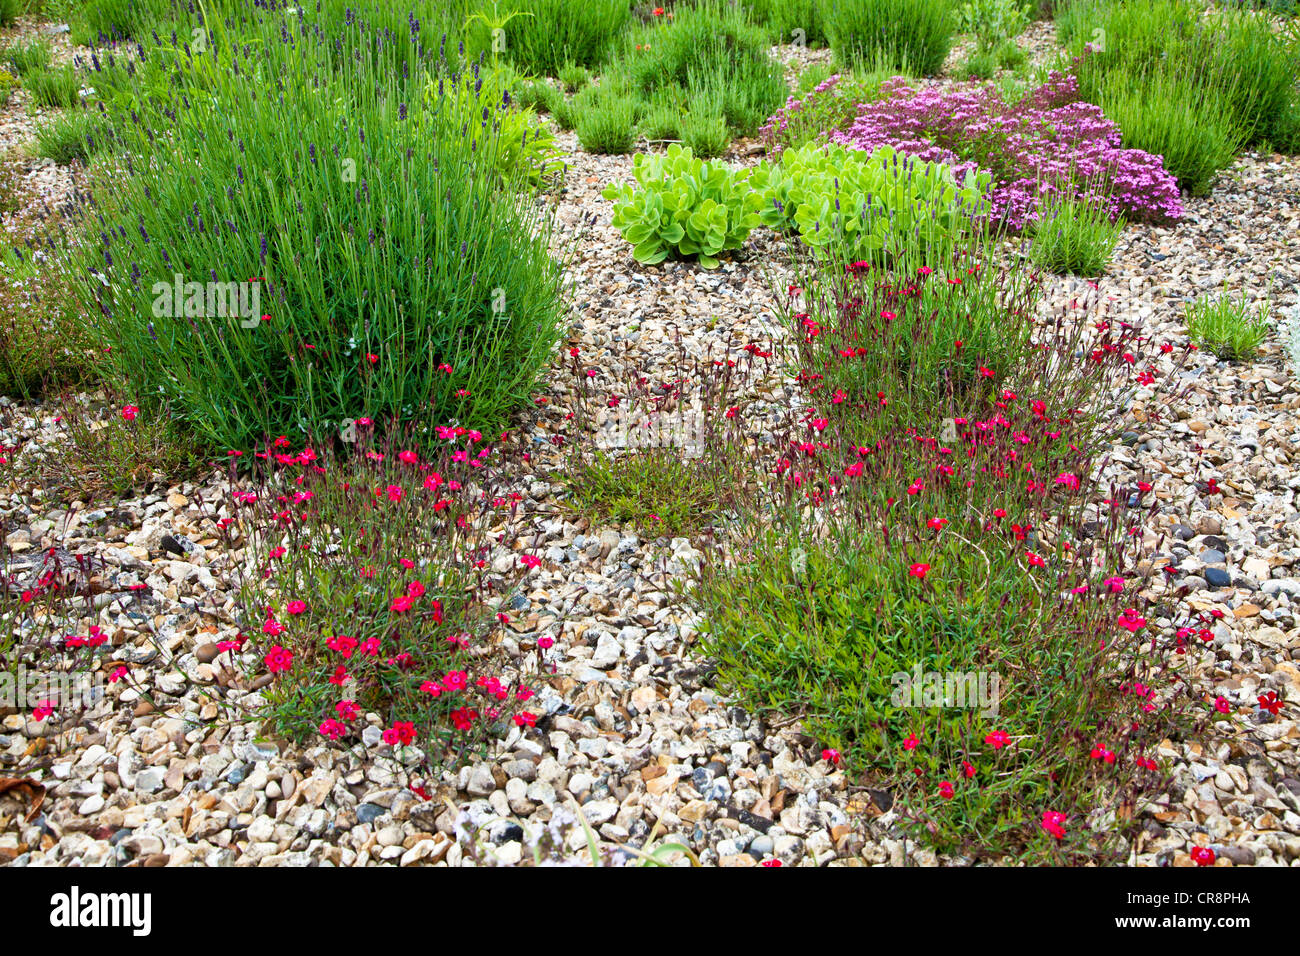 Kies Garten mit Dürre tolerant Pflanzen Lavendel (Lavendula 'Hidcote') und Dianthus (Dianthus Deltoides "Flashing Lights") Stockfoto